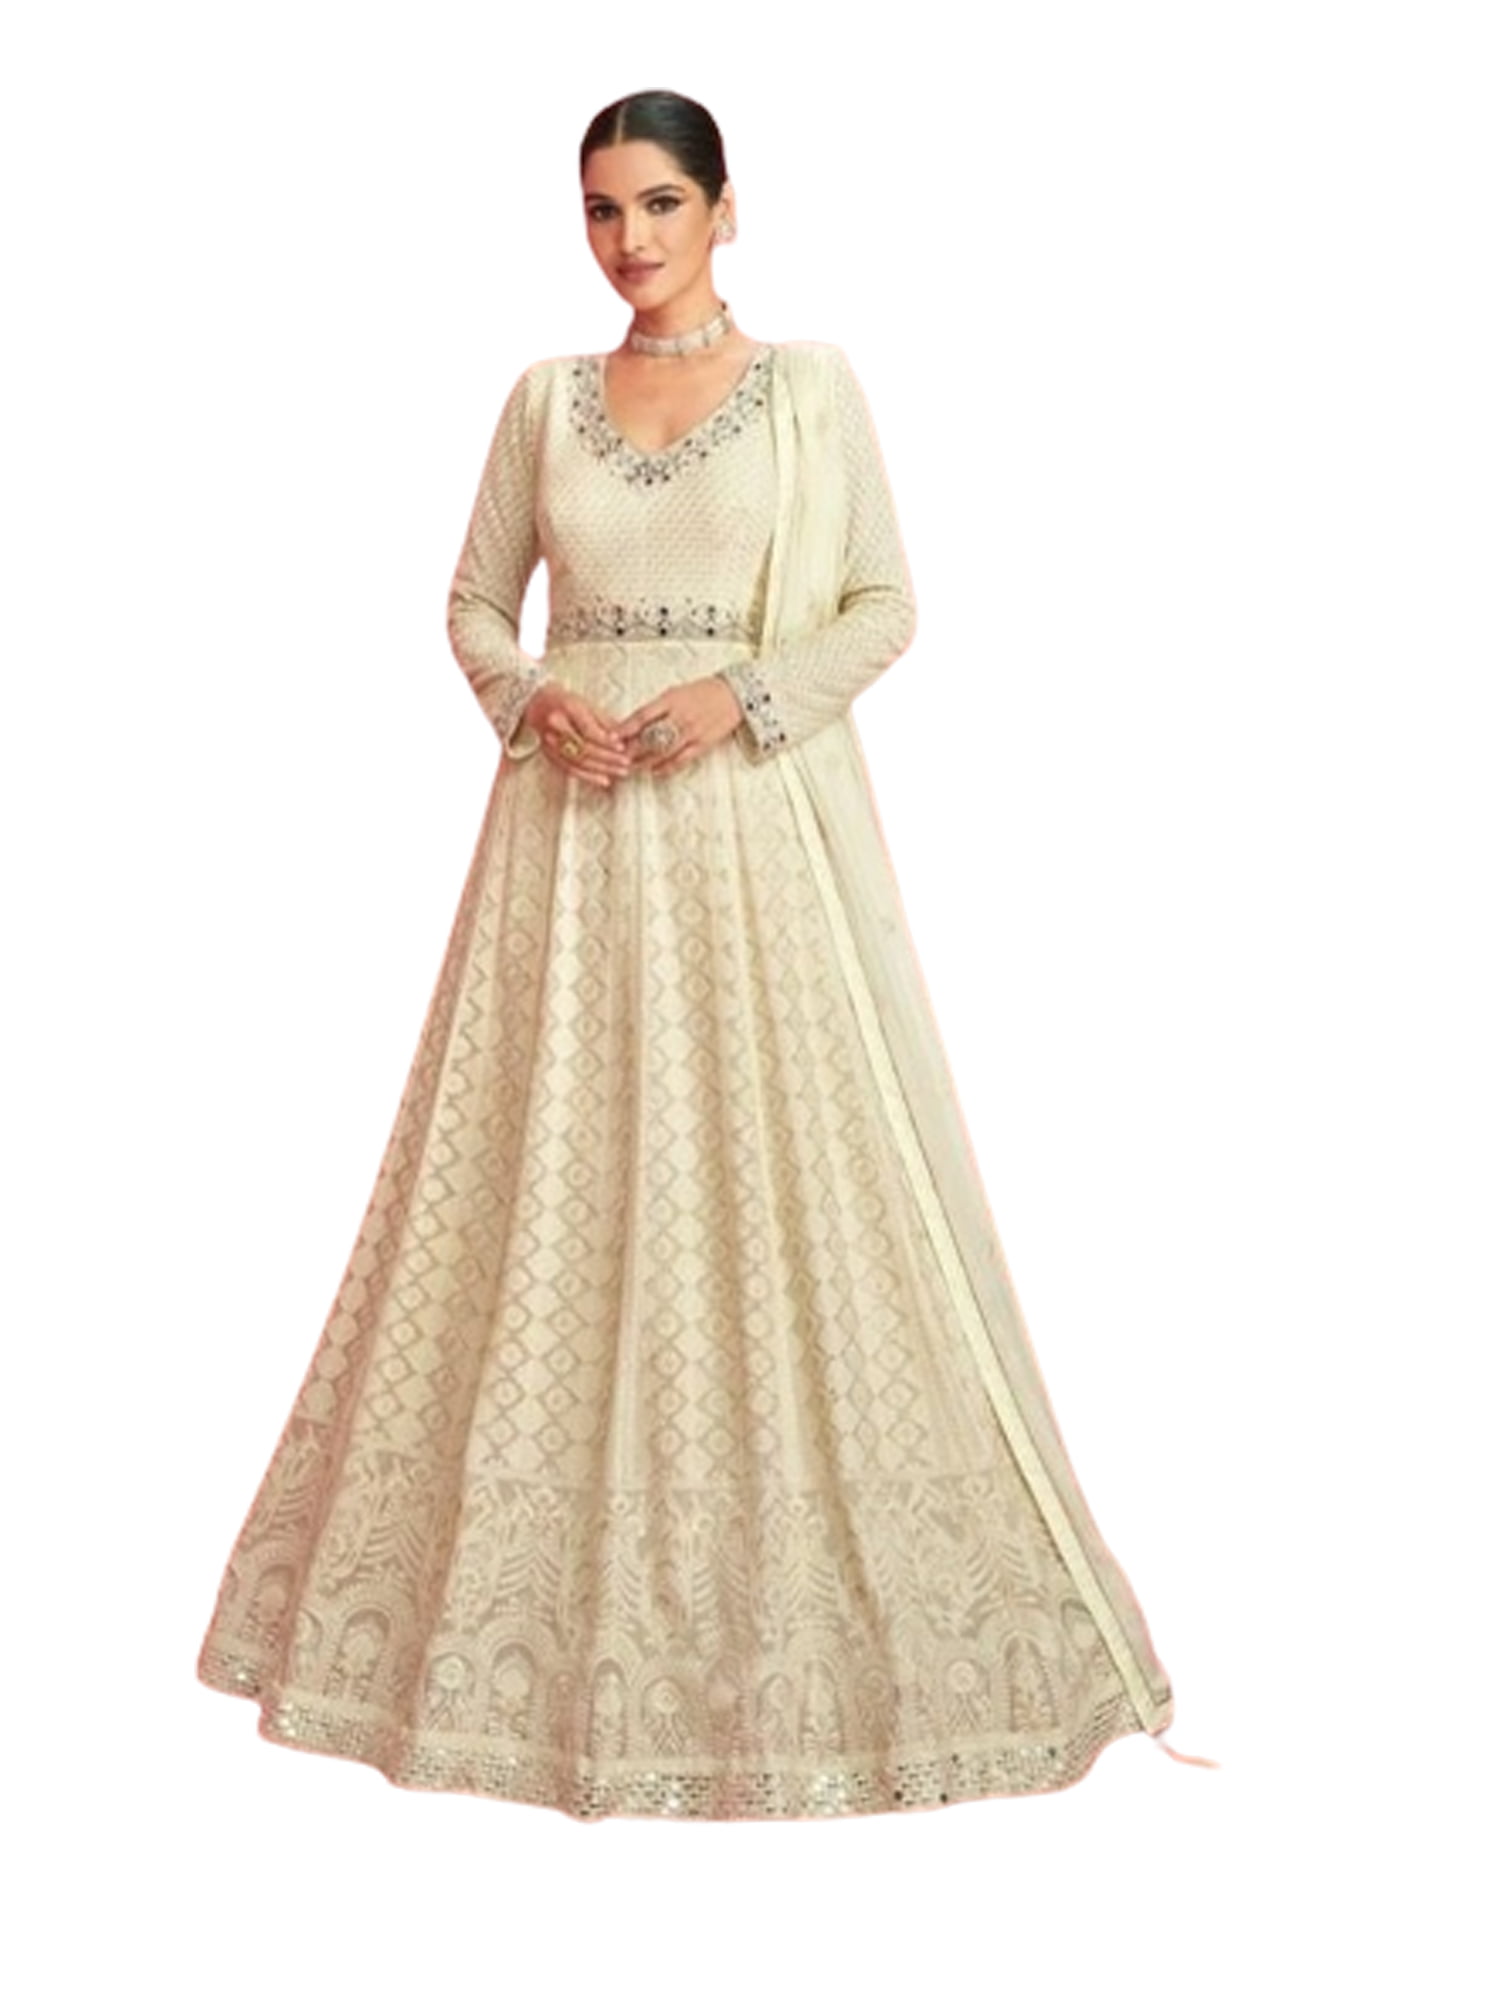 Indian Wedding Anarkali Salwar Kameez Party Wear Embroidery long dress gown  suit | eBay